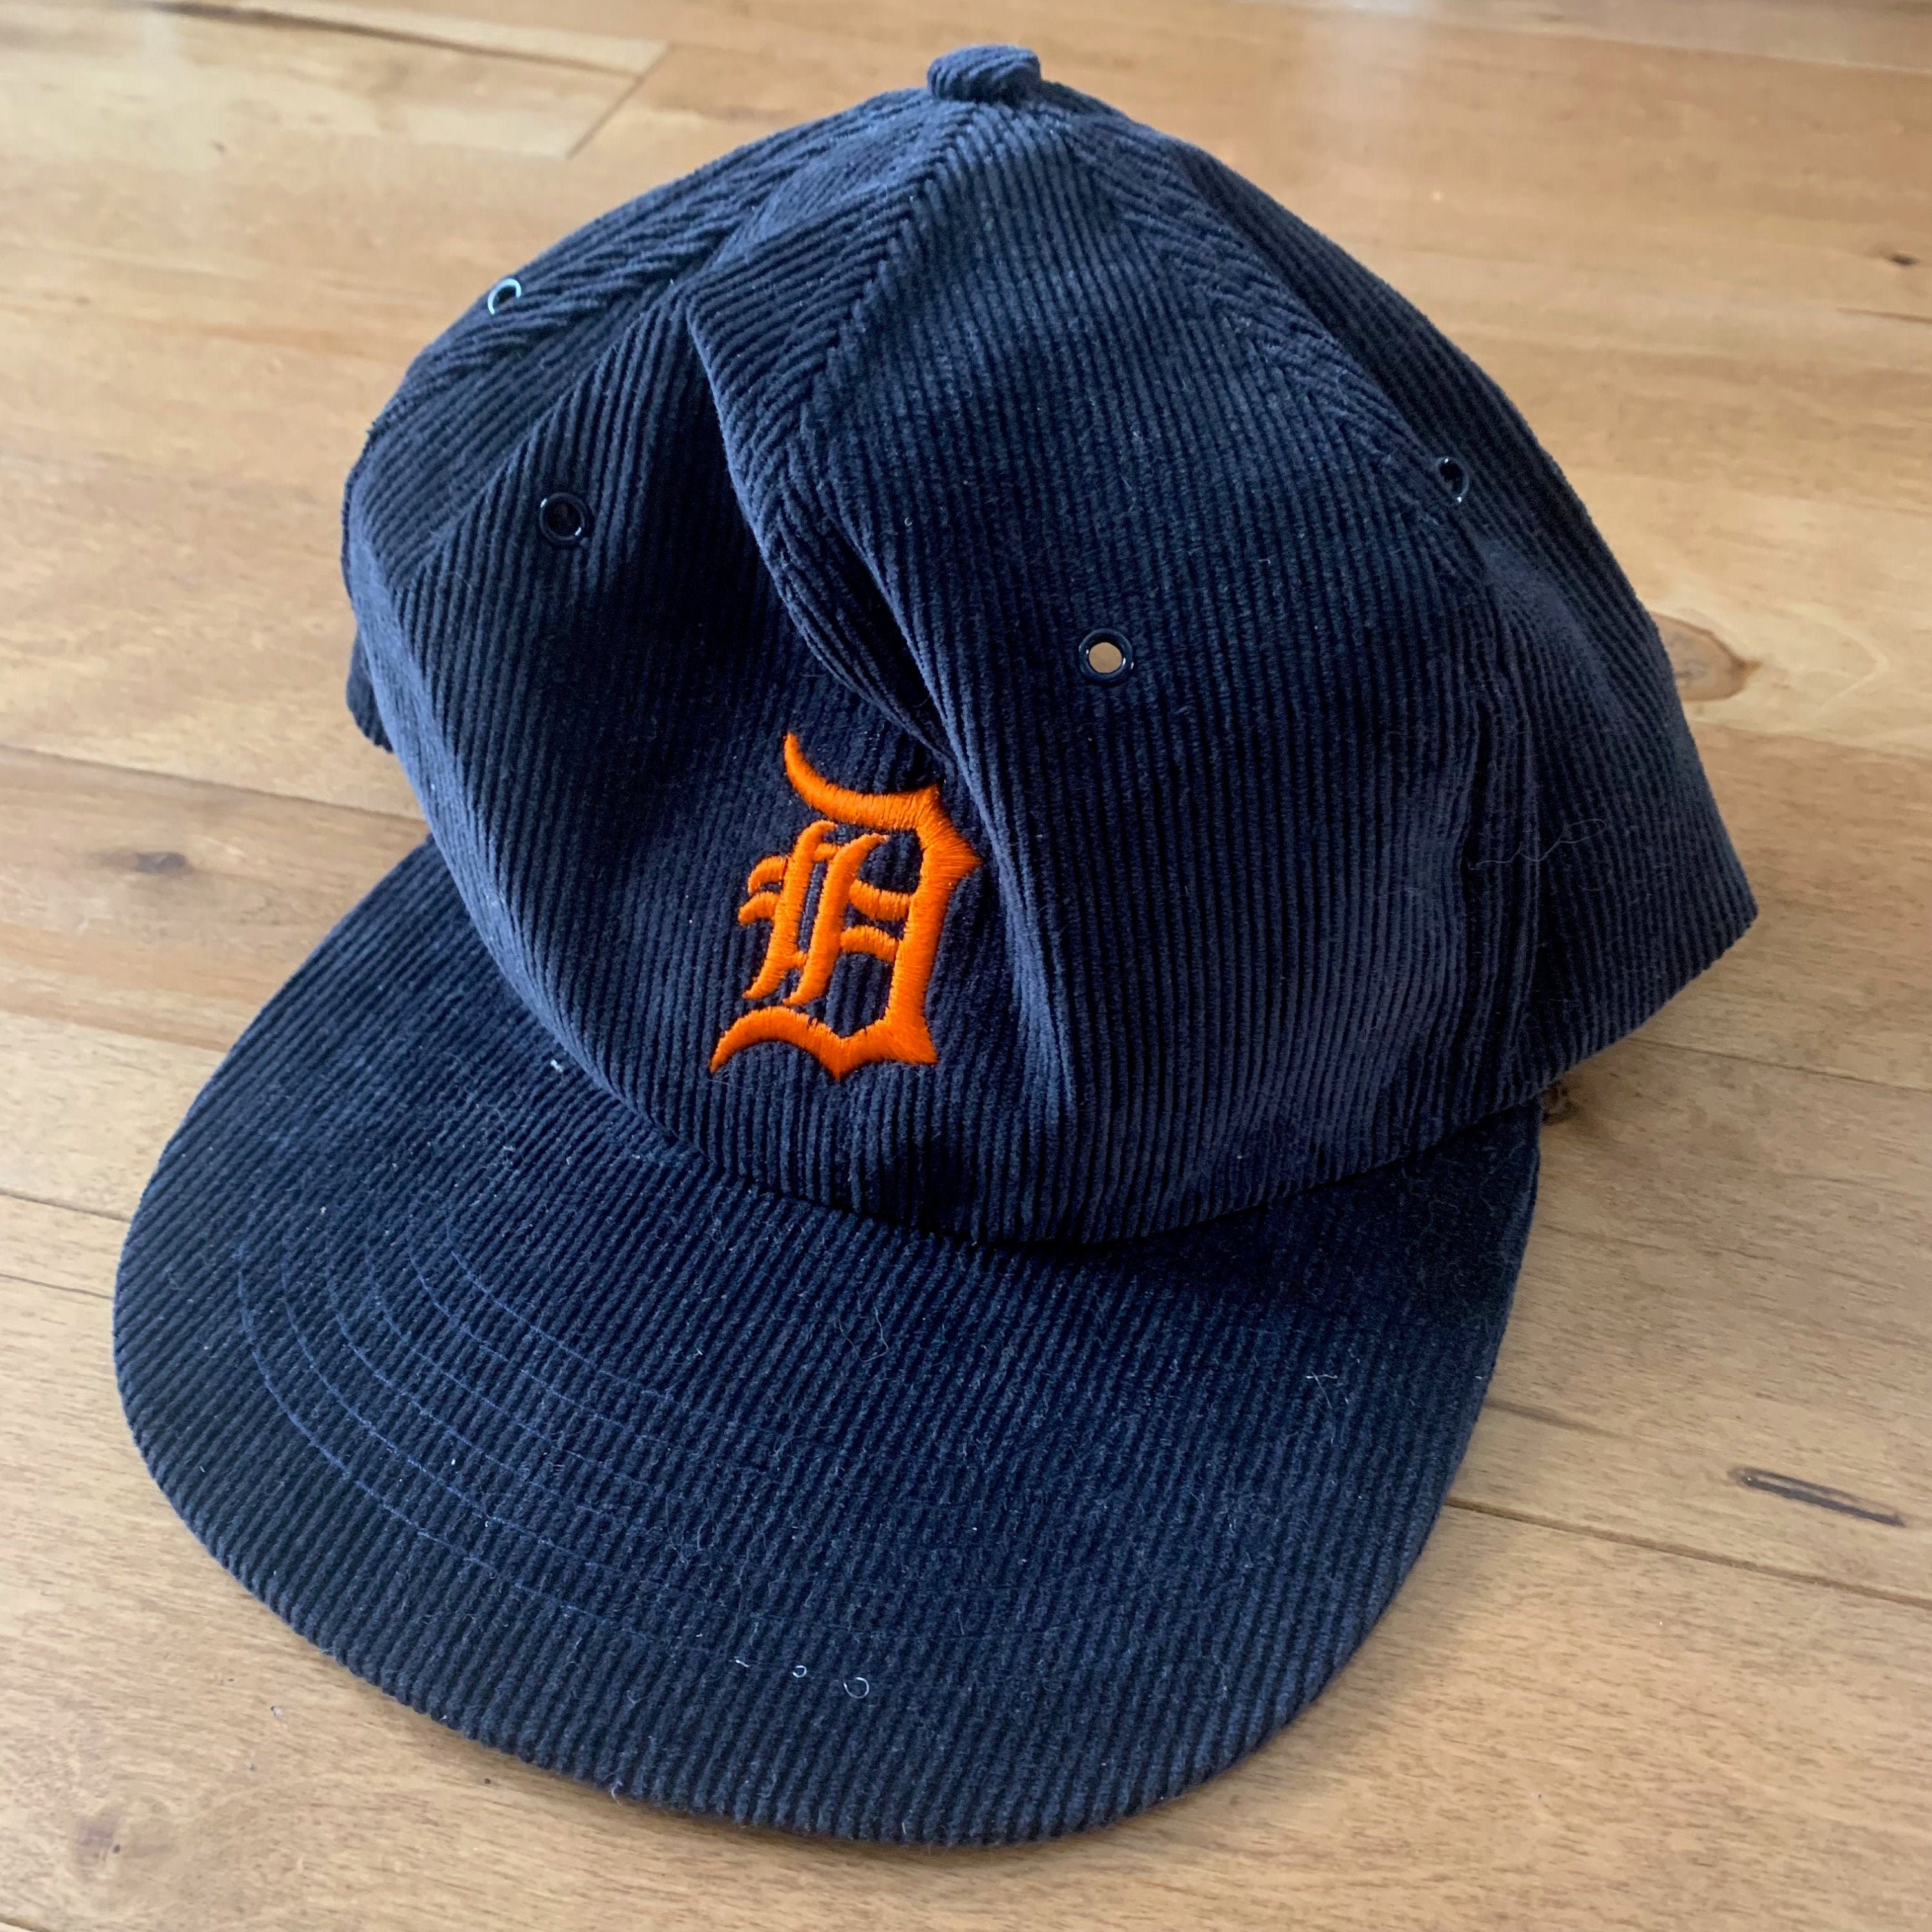 90s Detroit Tigers Embroidered Corduroy Snapback Hat Vintage 1990s 100%  Cotton Baseball Cap MLB Major League Ball Park Franks Hot Dogs